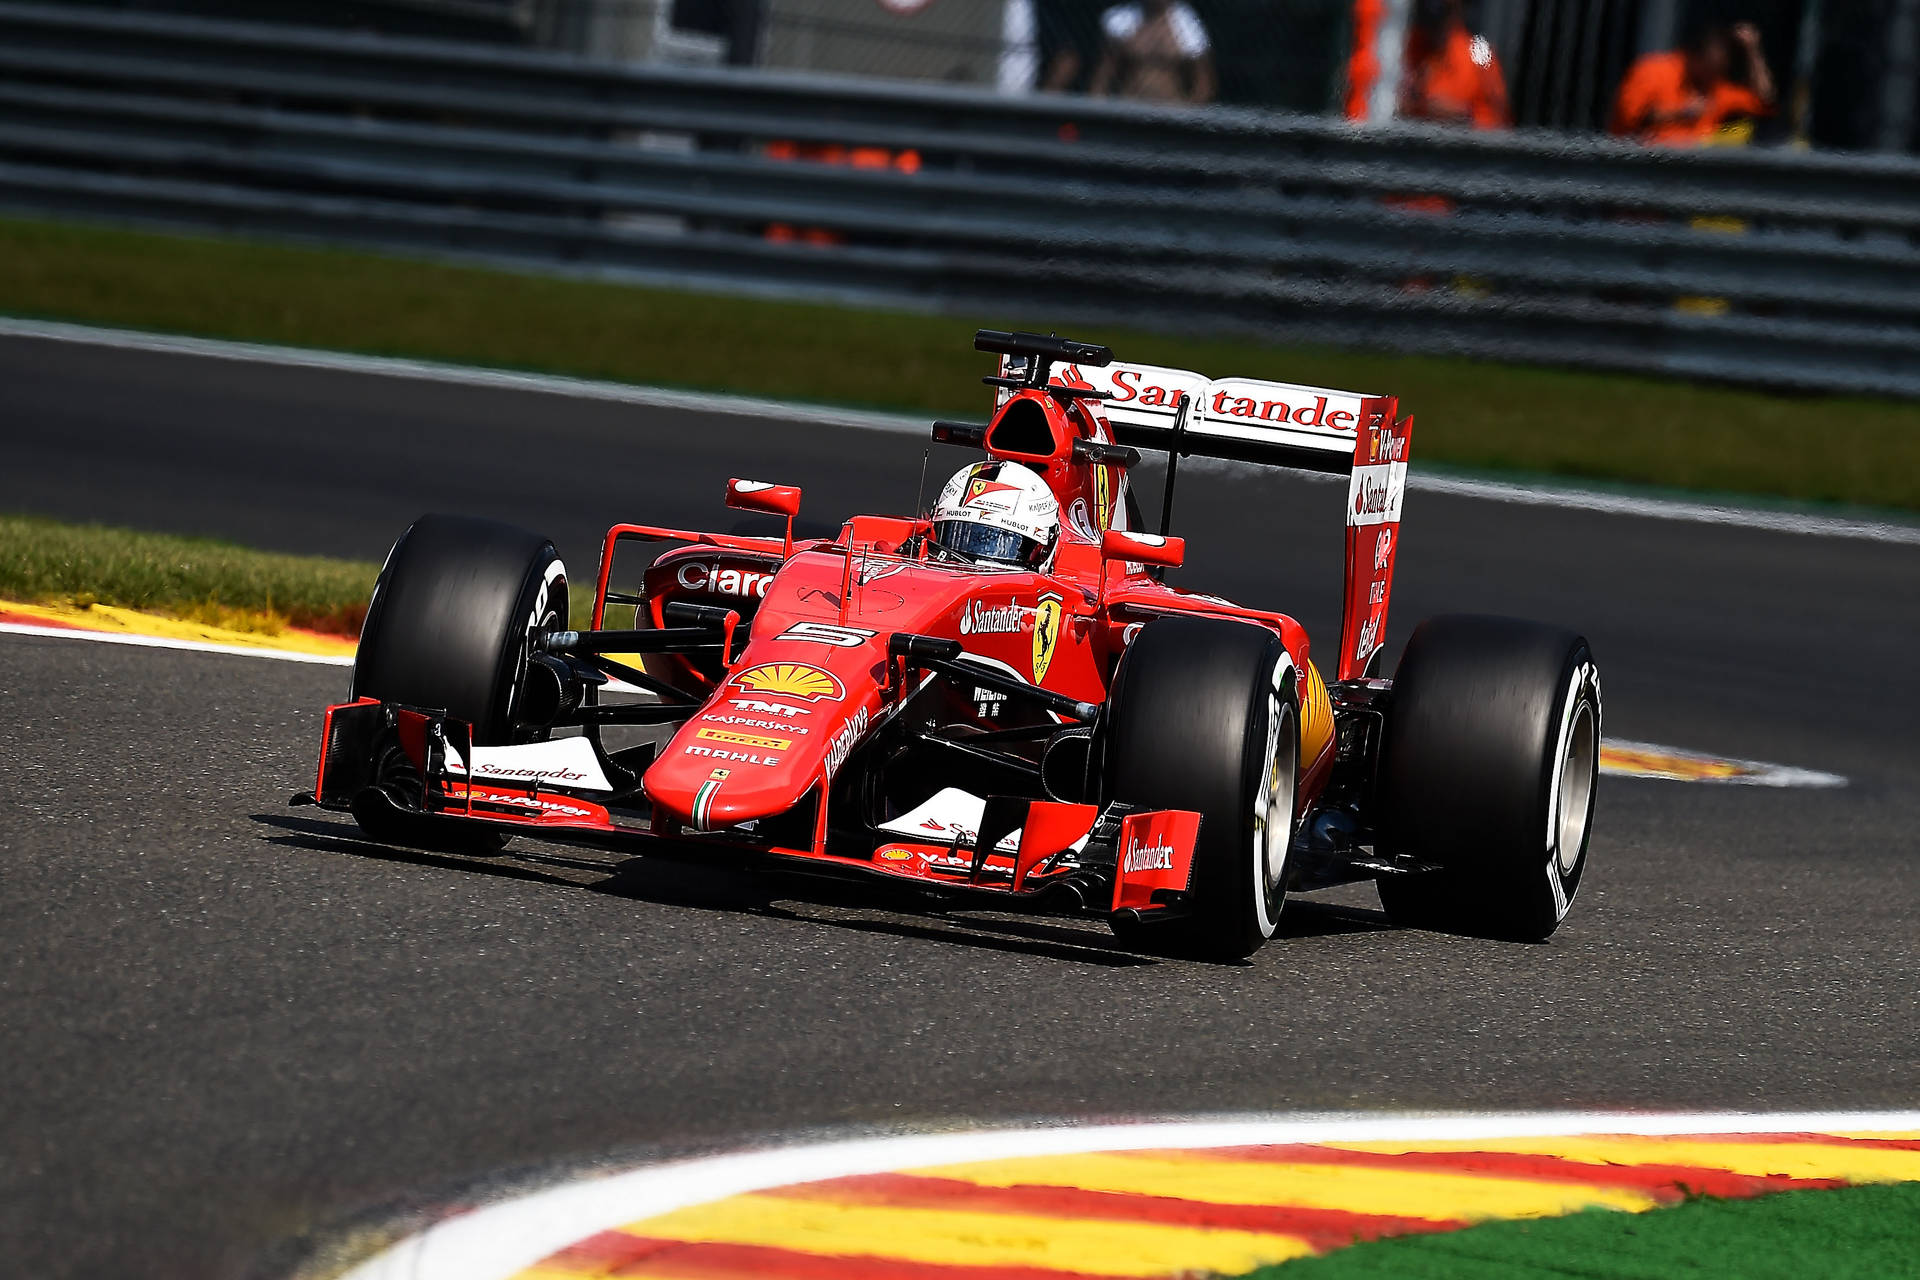 Ferrari F1 Car Driving On A Track Background